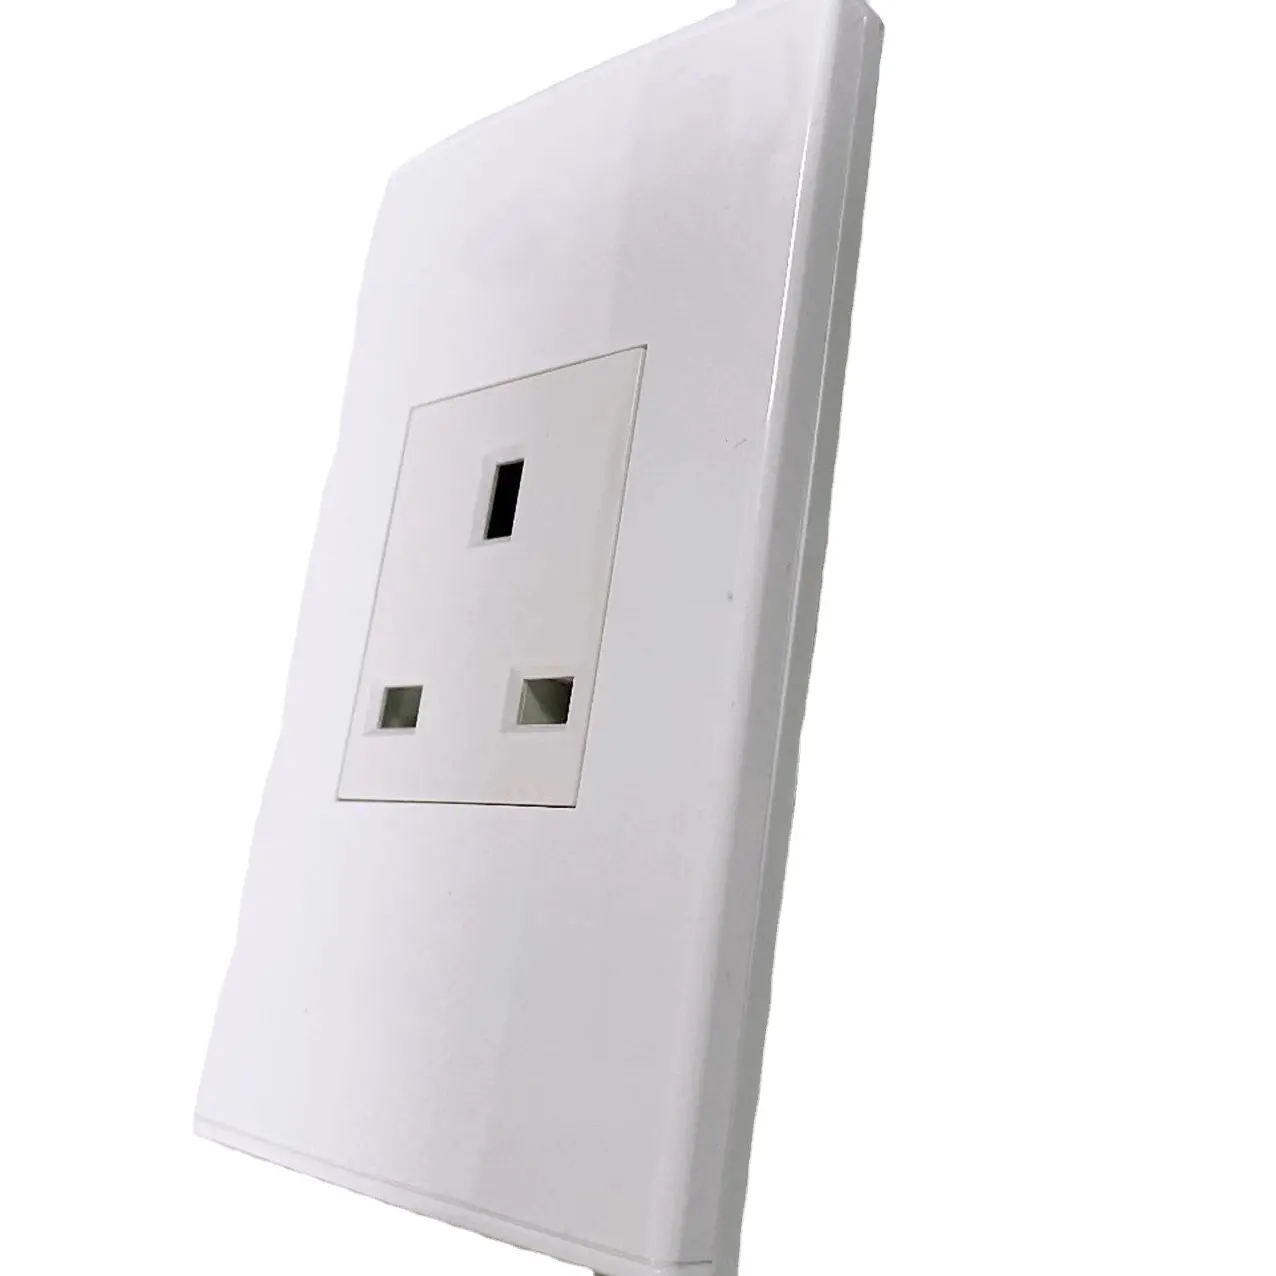 Socket UK power outlet 120mm*70mm OEM white electric 250V/13A wall face plate outlet socket